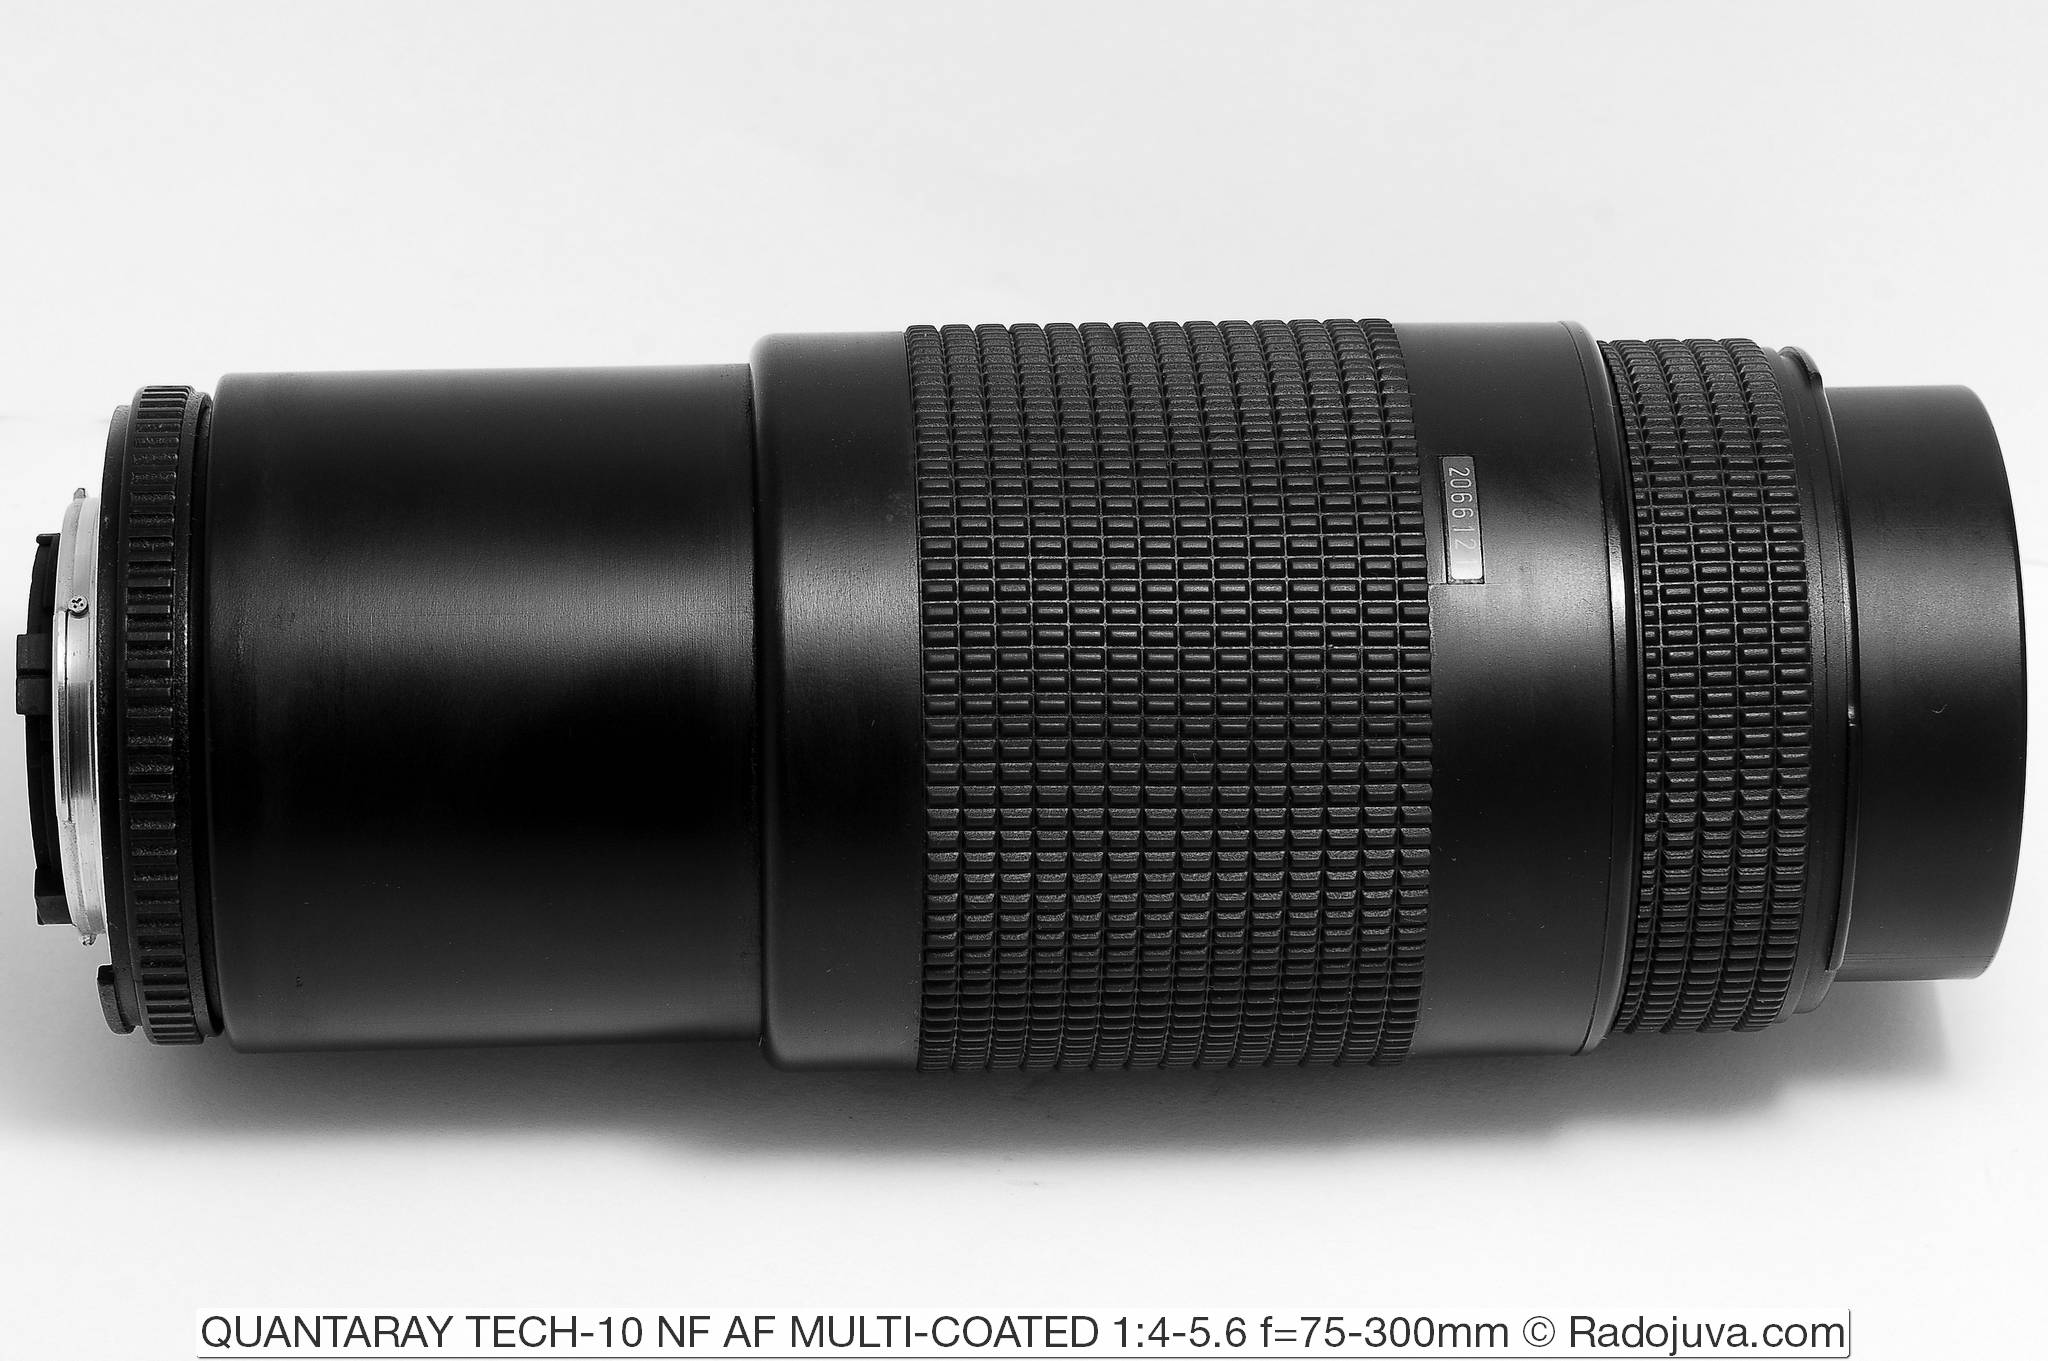 QUANTARAY TECH-10 NF AF MULTI-COATED 1: 4-5.6 f = 75-300mm